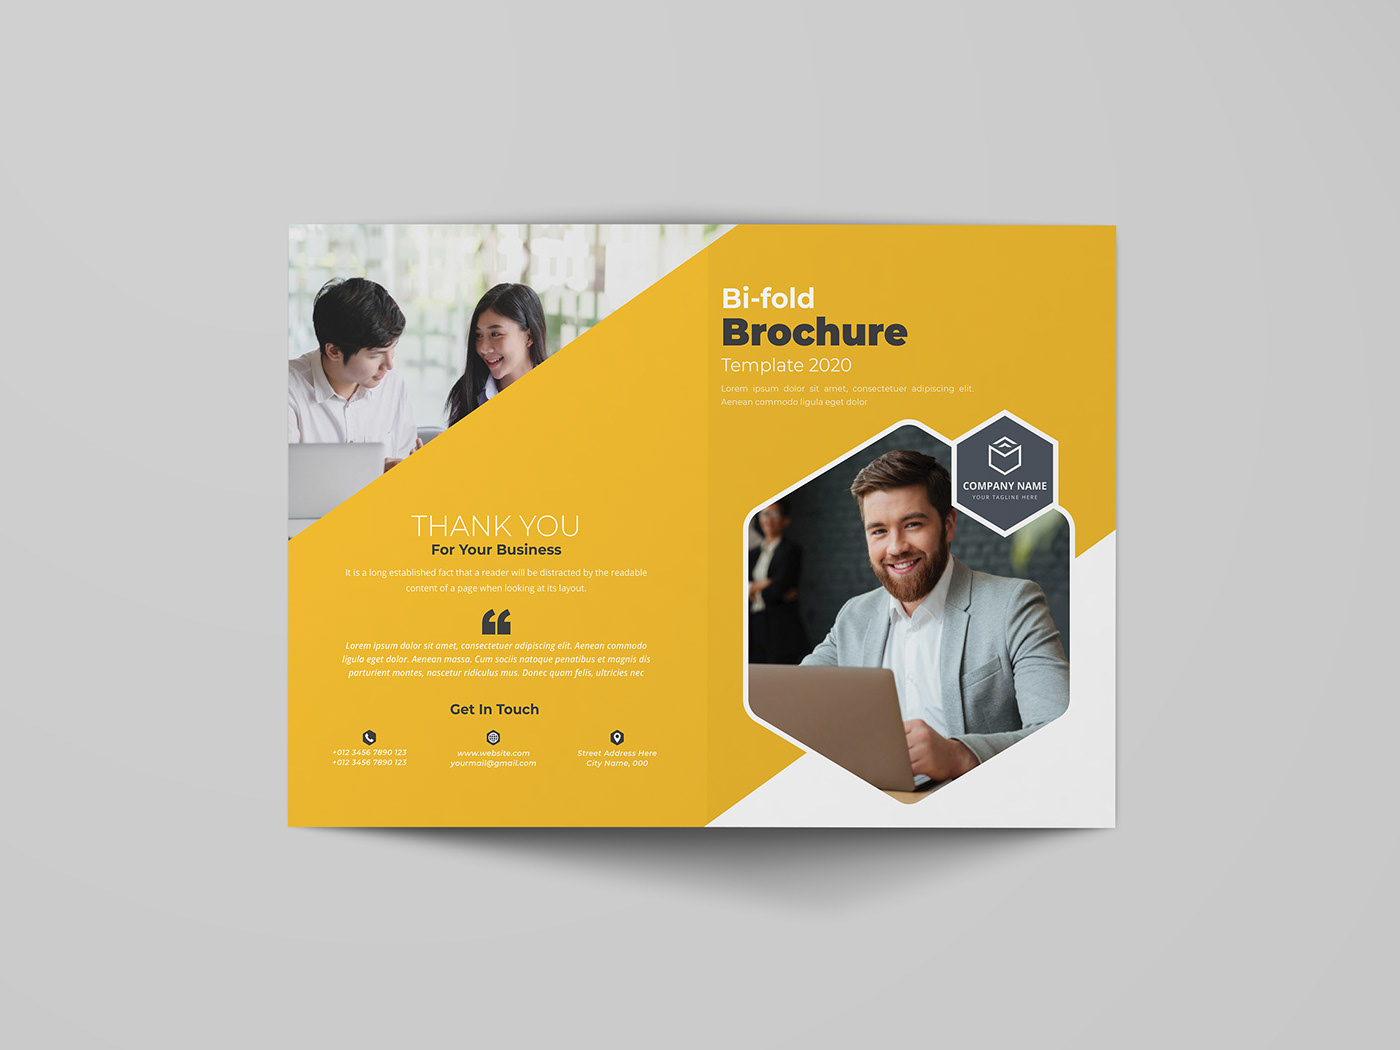 Bi-fold Brochure Design Template  Freebie  on Behance With Regard To Creative Brochure Templates Free Download